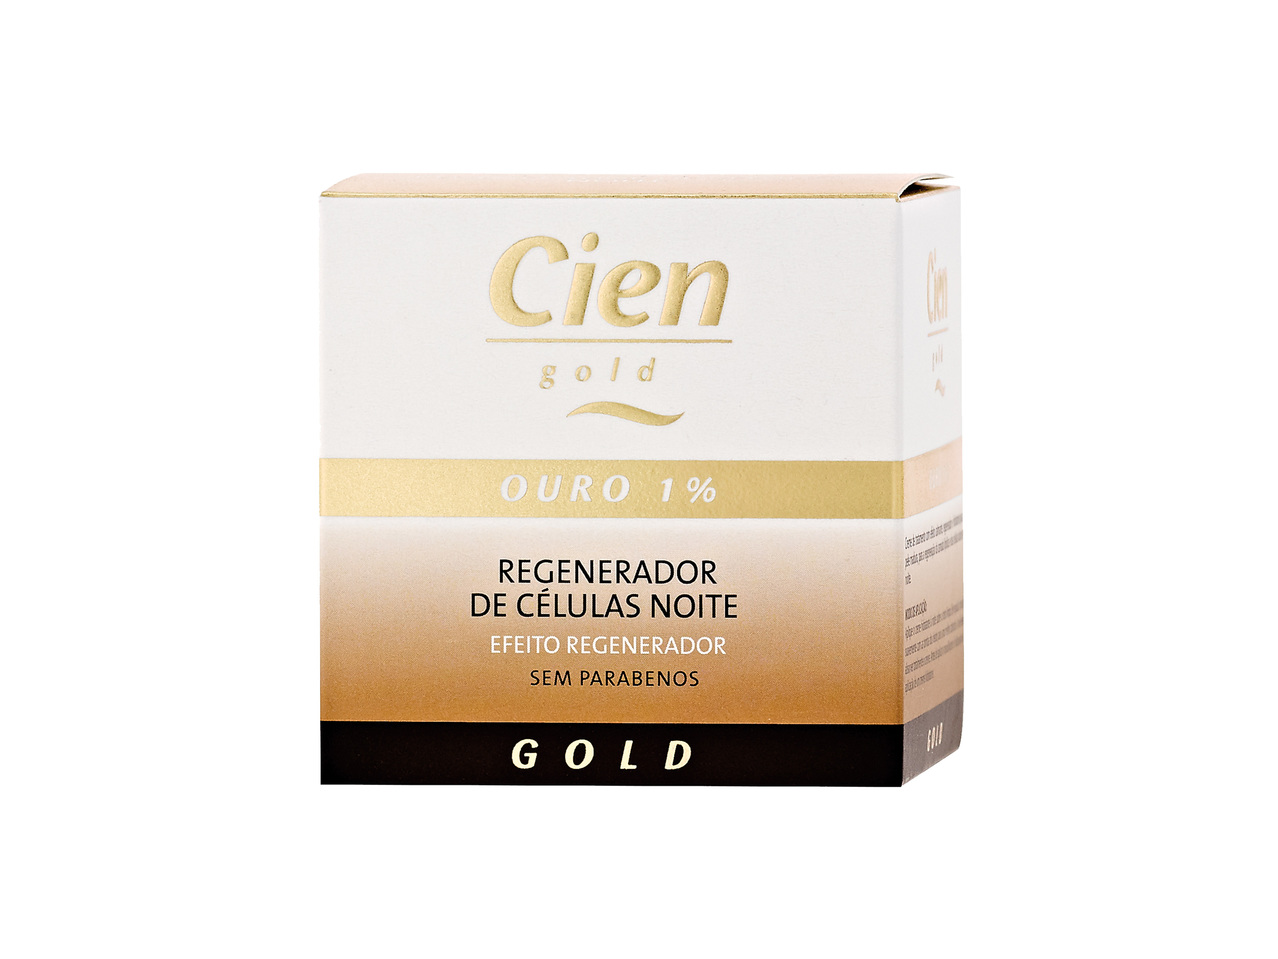 CIEN(R) Creme Gold Rosto